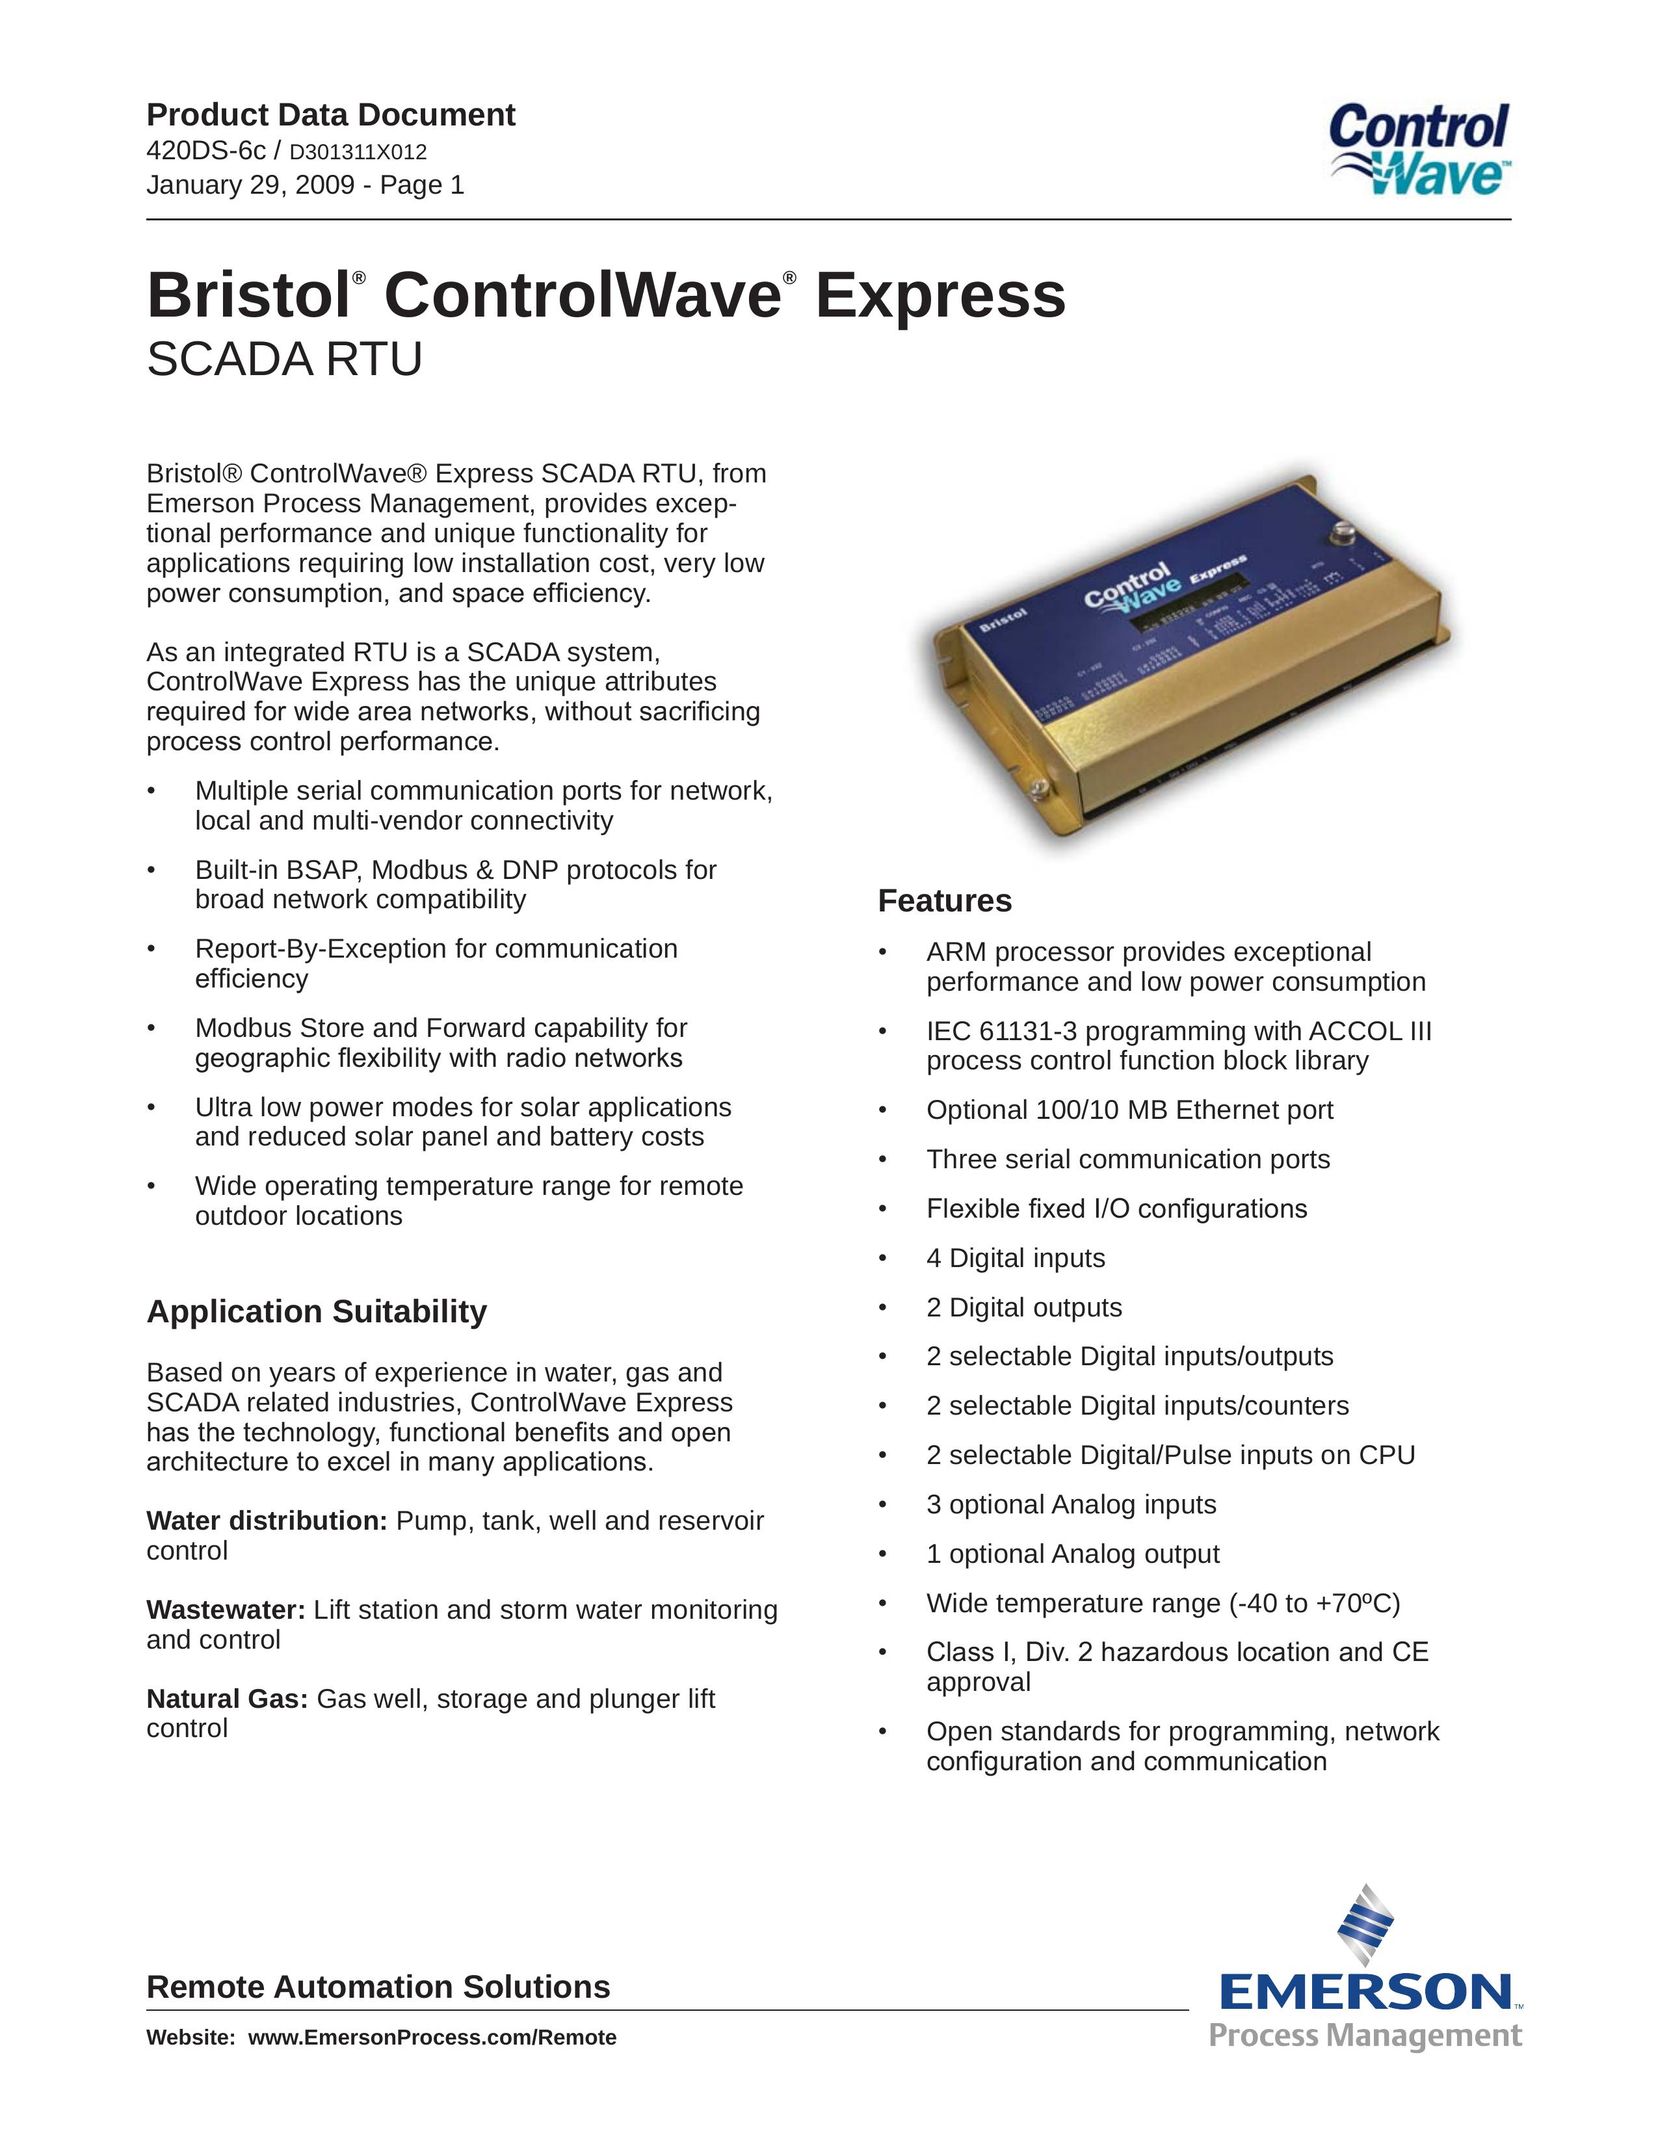 Emerson Process Management Express Network Card User Manual